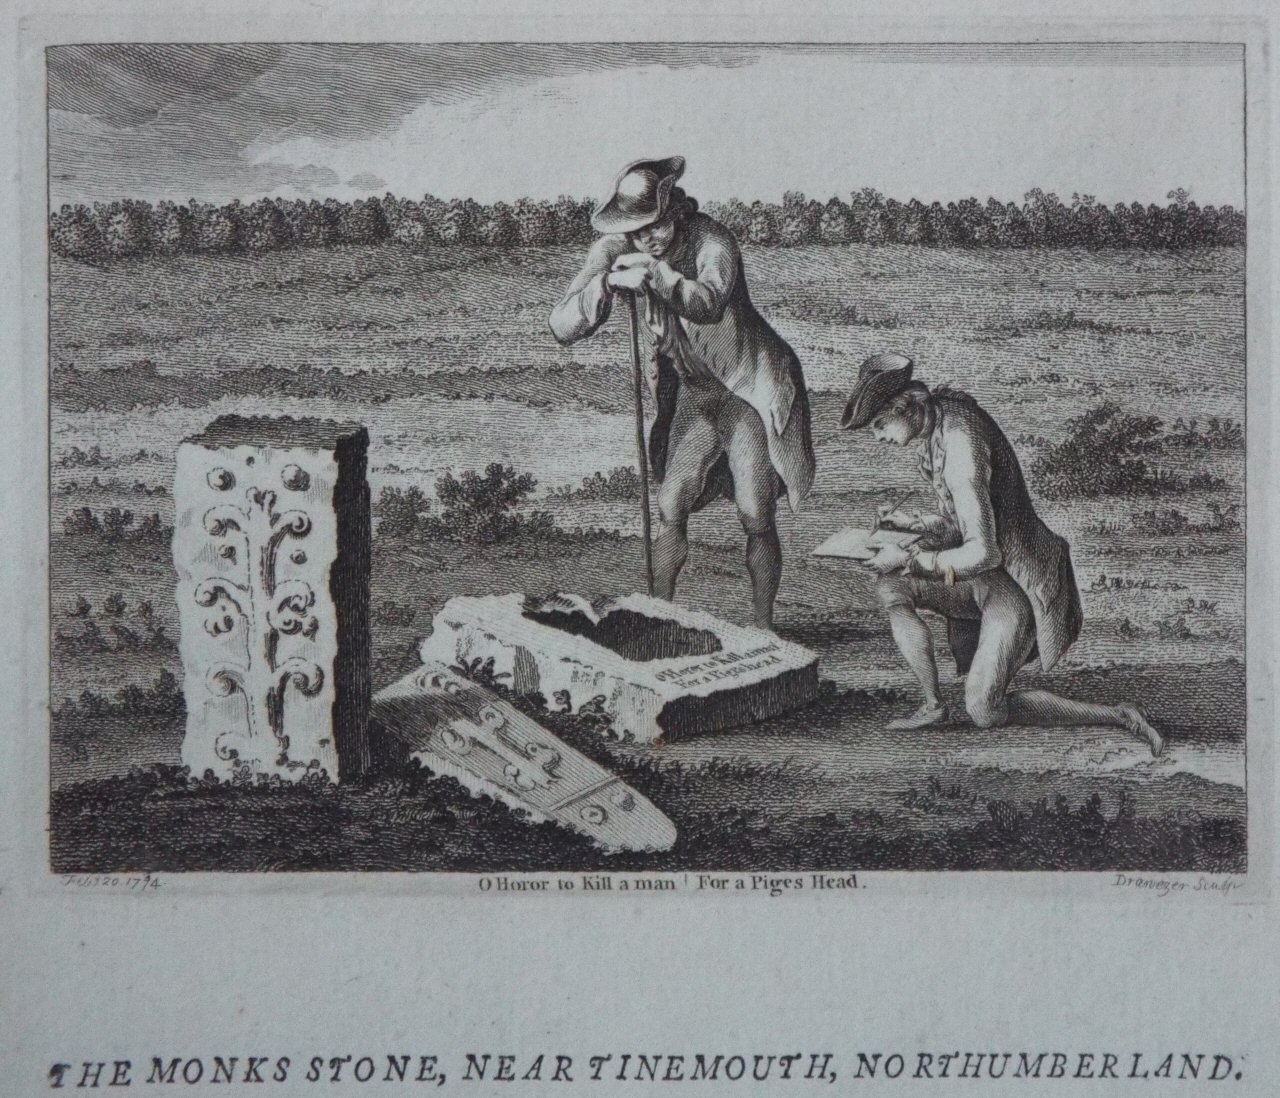 Print - The Monk's Stone, near Tynemouth, Northumberland. - 